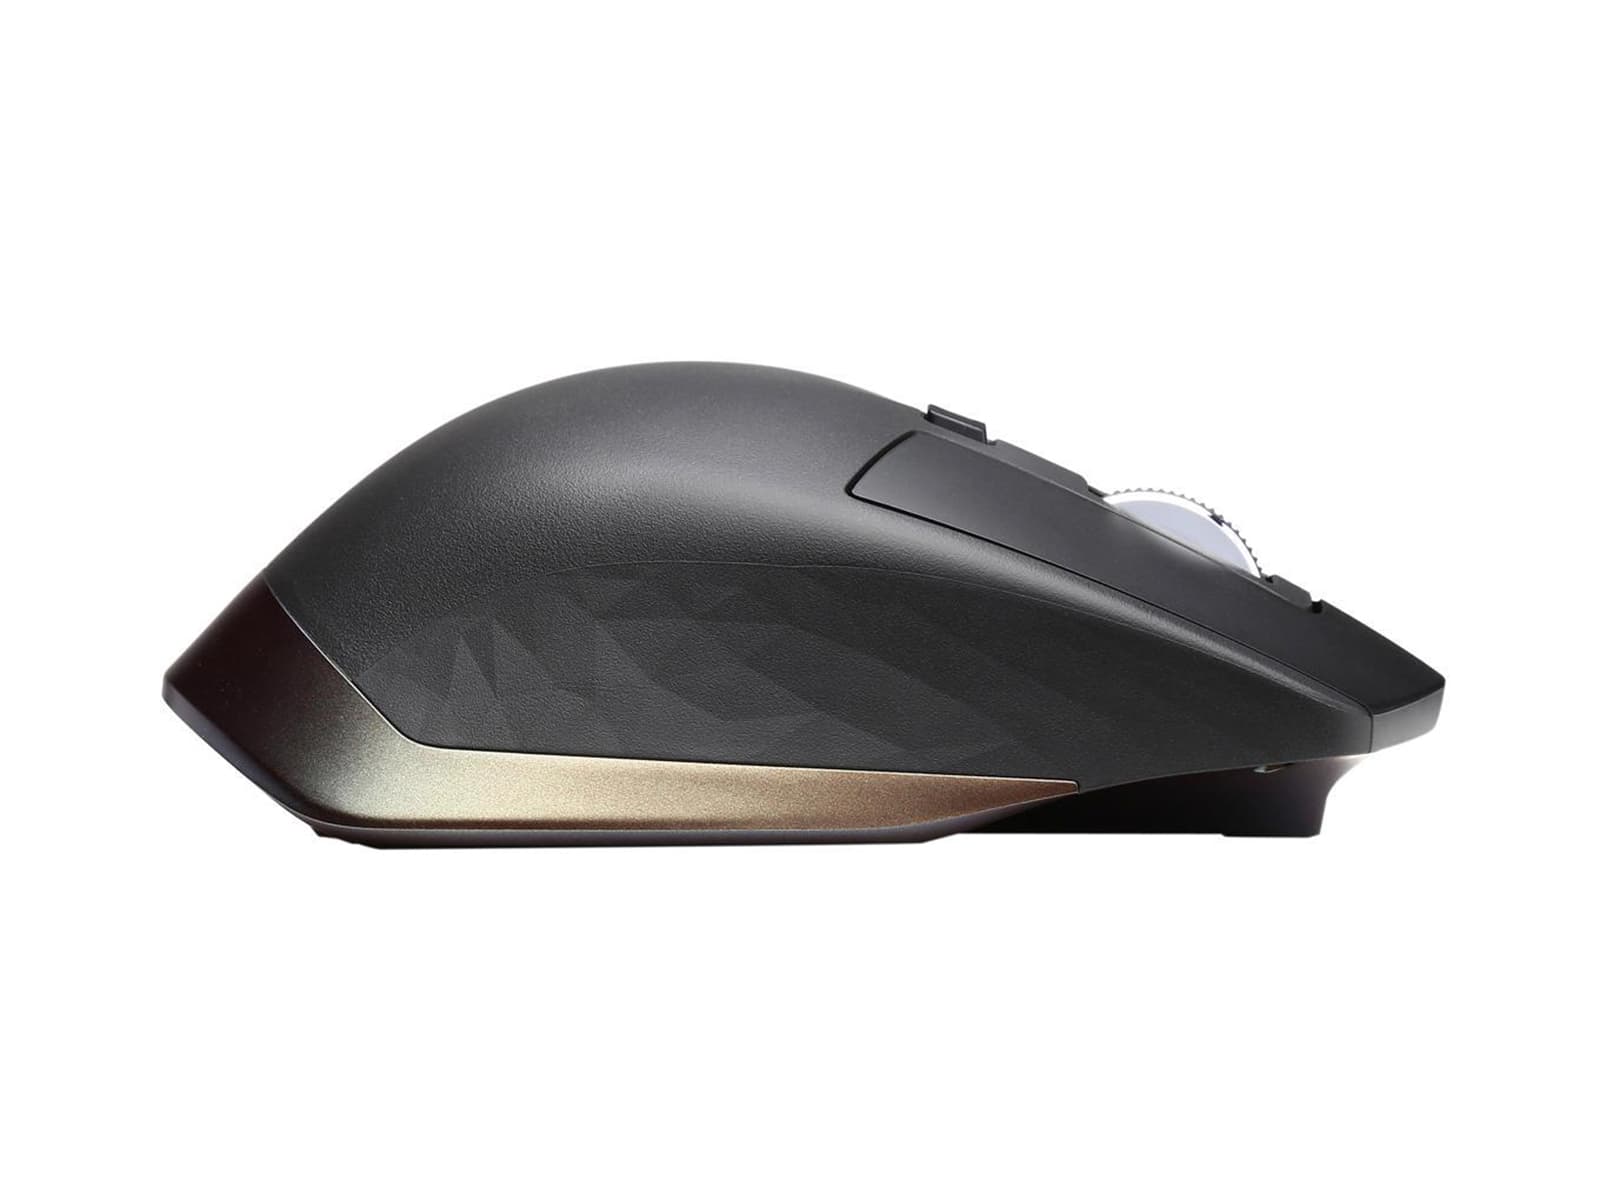 Logitech MX Master Rechargeable Wireless Mouse (910-005527) Monitors.com 